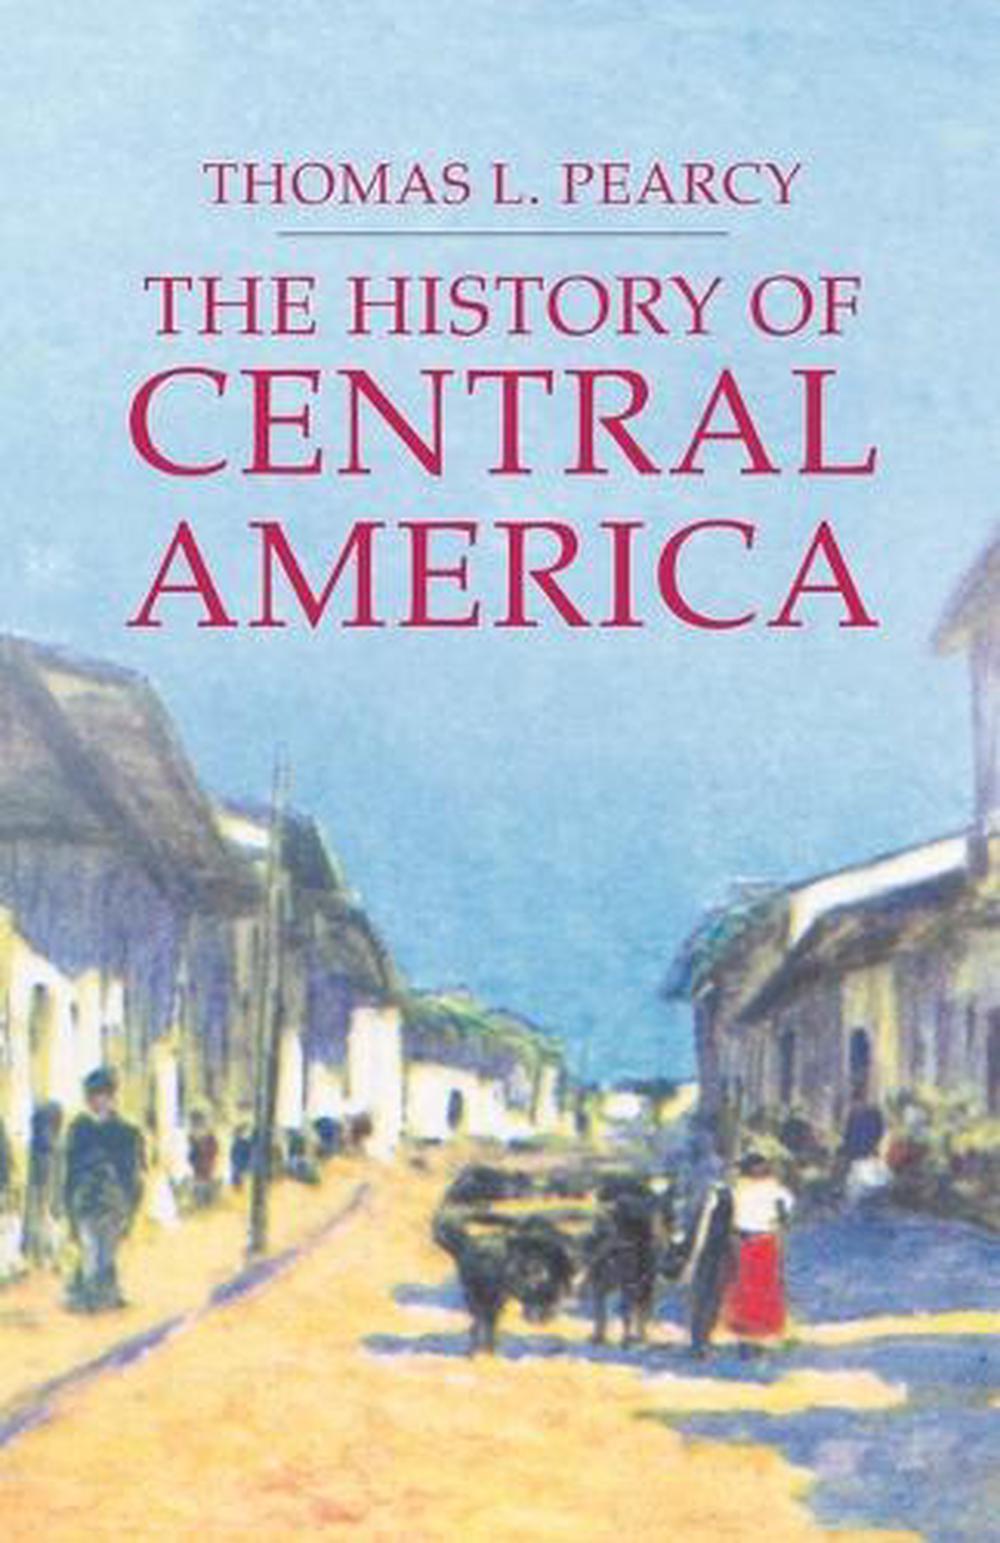 central america travel book